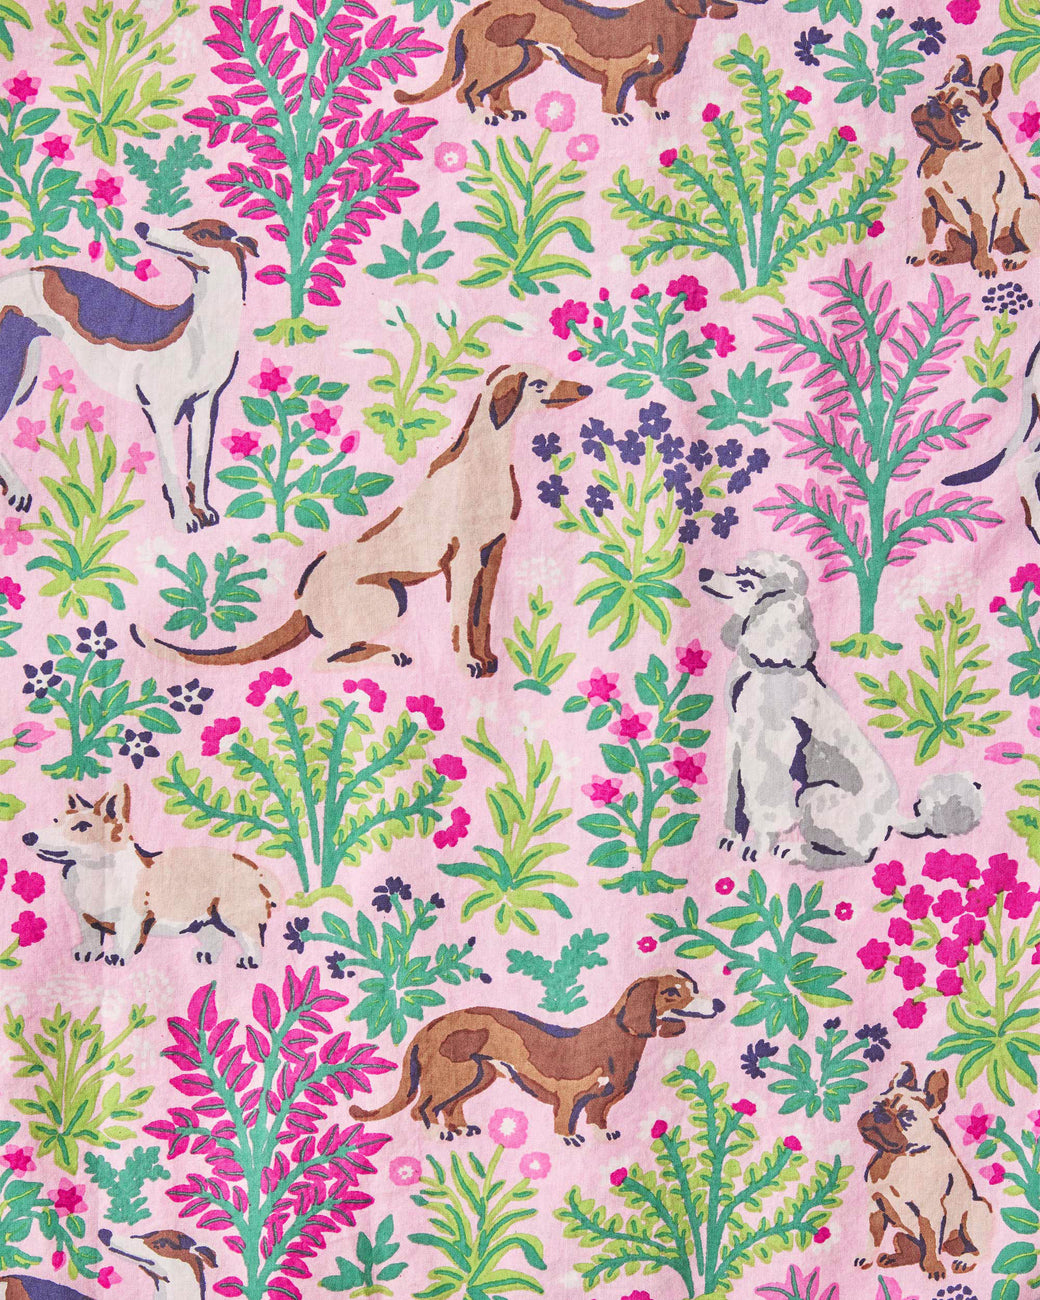 Must Love Dogs - Petite Short Sleeve Top & Long Pants Set - Pink Peony - Printfresh